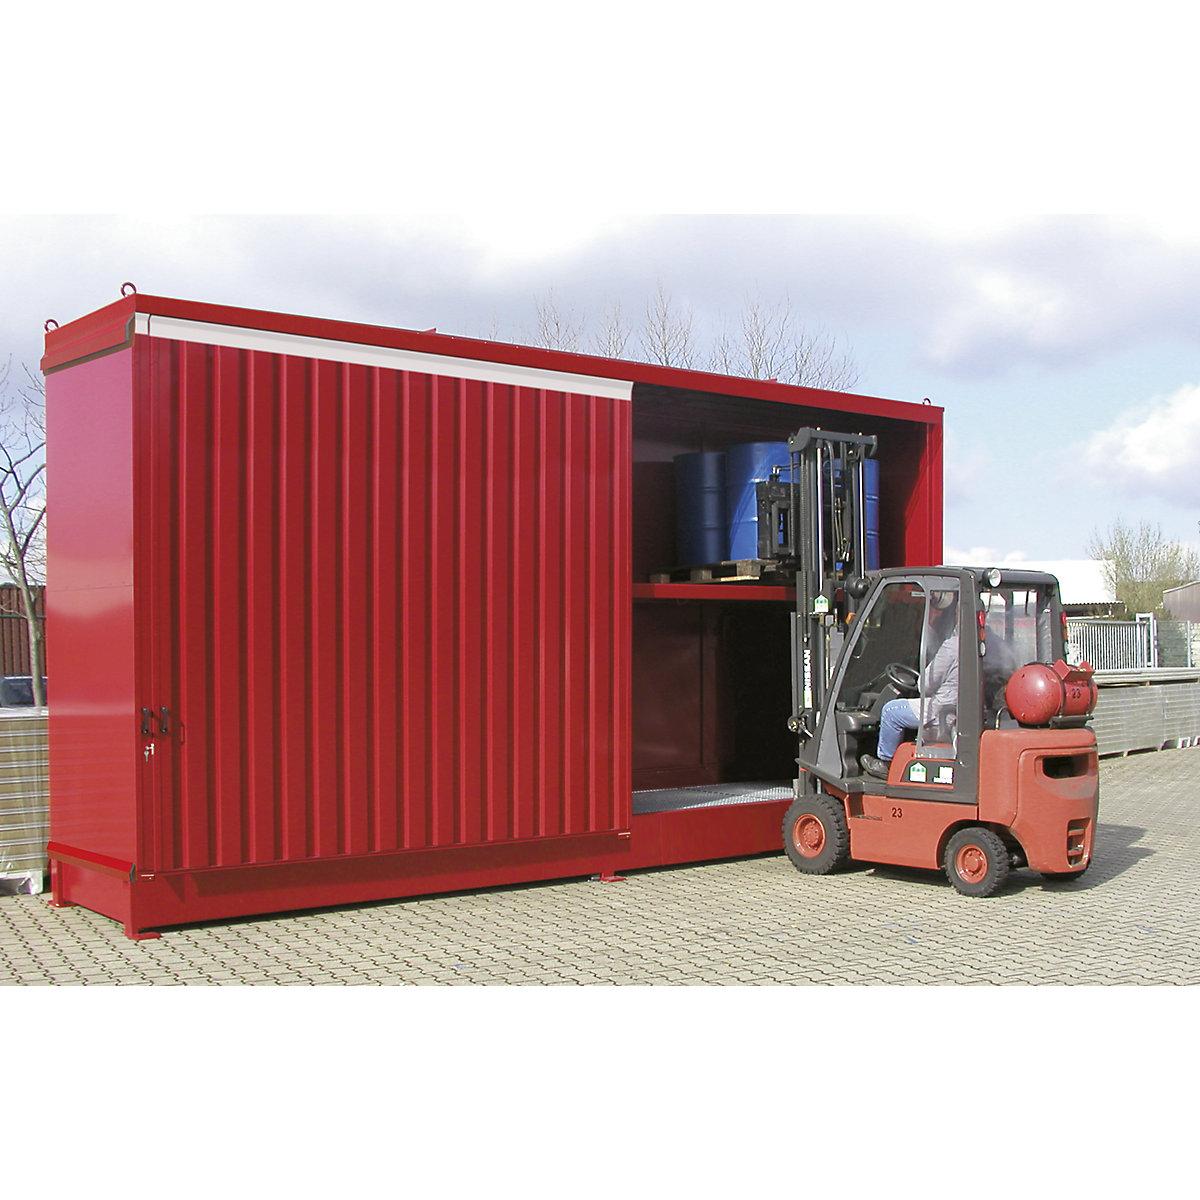 Regalni kontejner za opasne tvari – eurokraft pro, kapacitet 32 x bačve volumena 200 l, u crvenoj boji-3